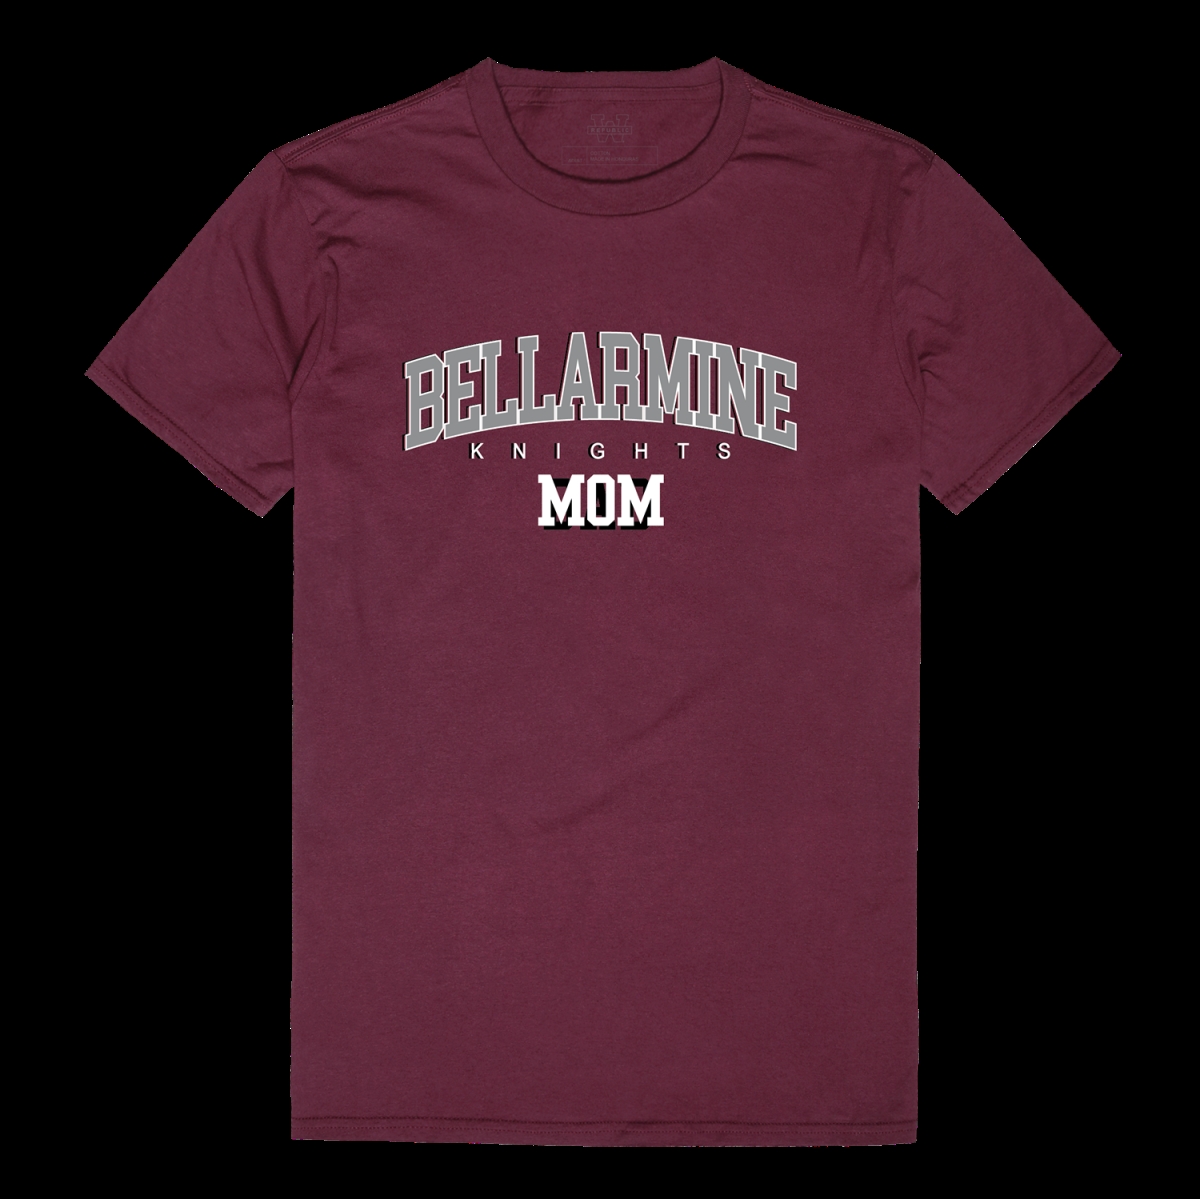 W Republic 549-706-MAR-05 Bellarmine University Knights College Mom T-Shirt&#44; Maroon - 2XL